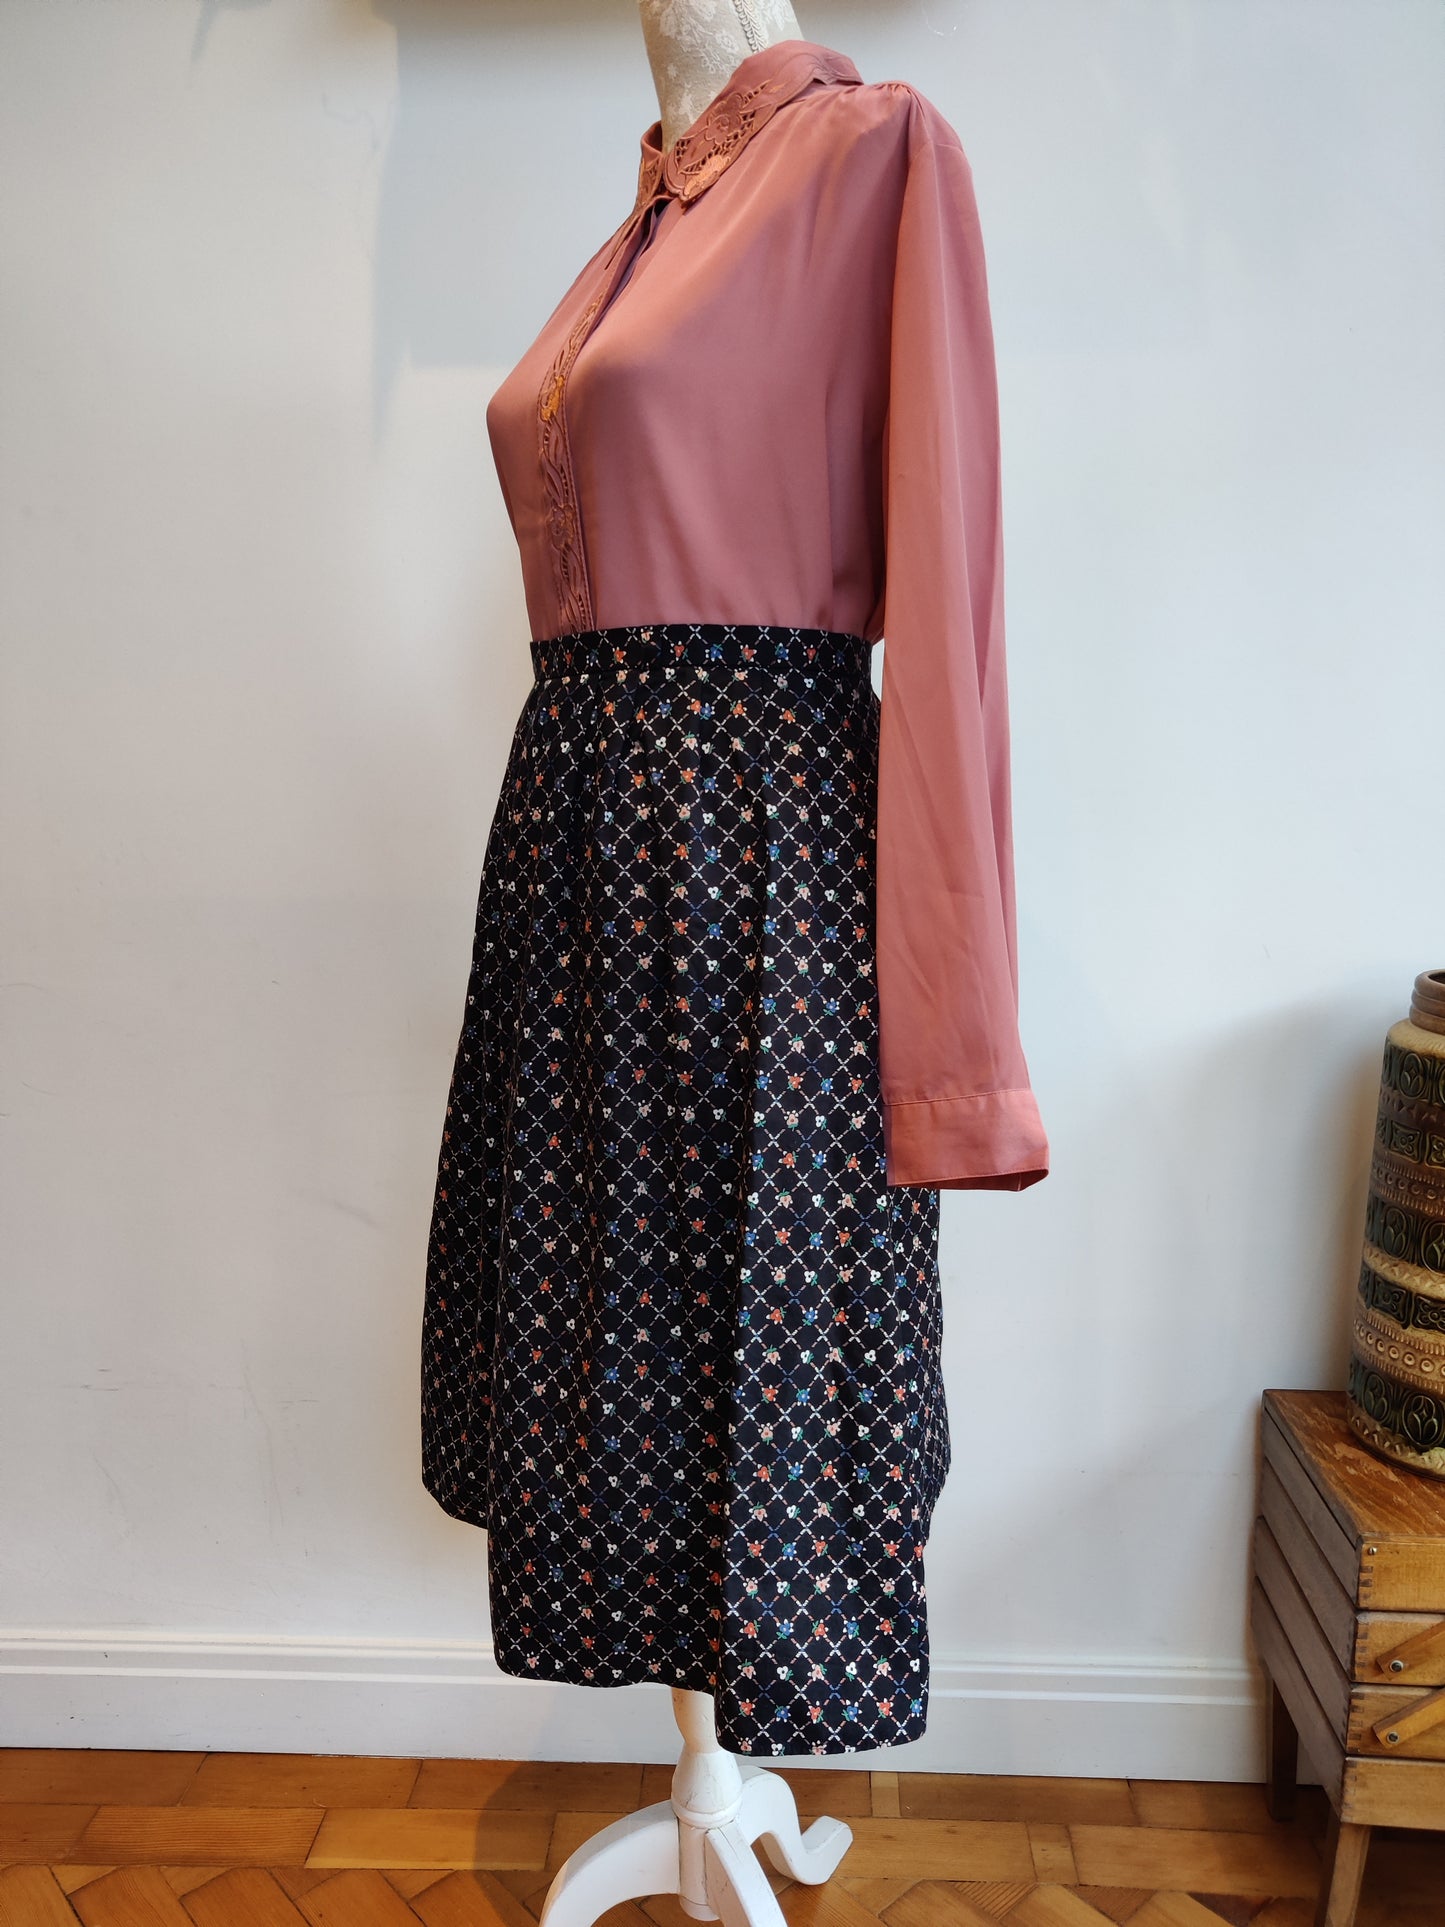 Pretty size 16 vintage midi skirt